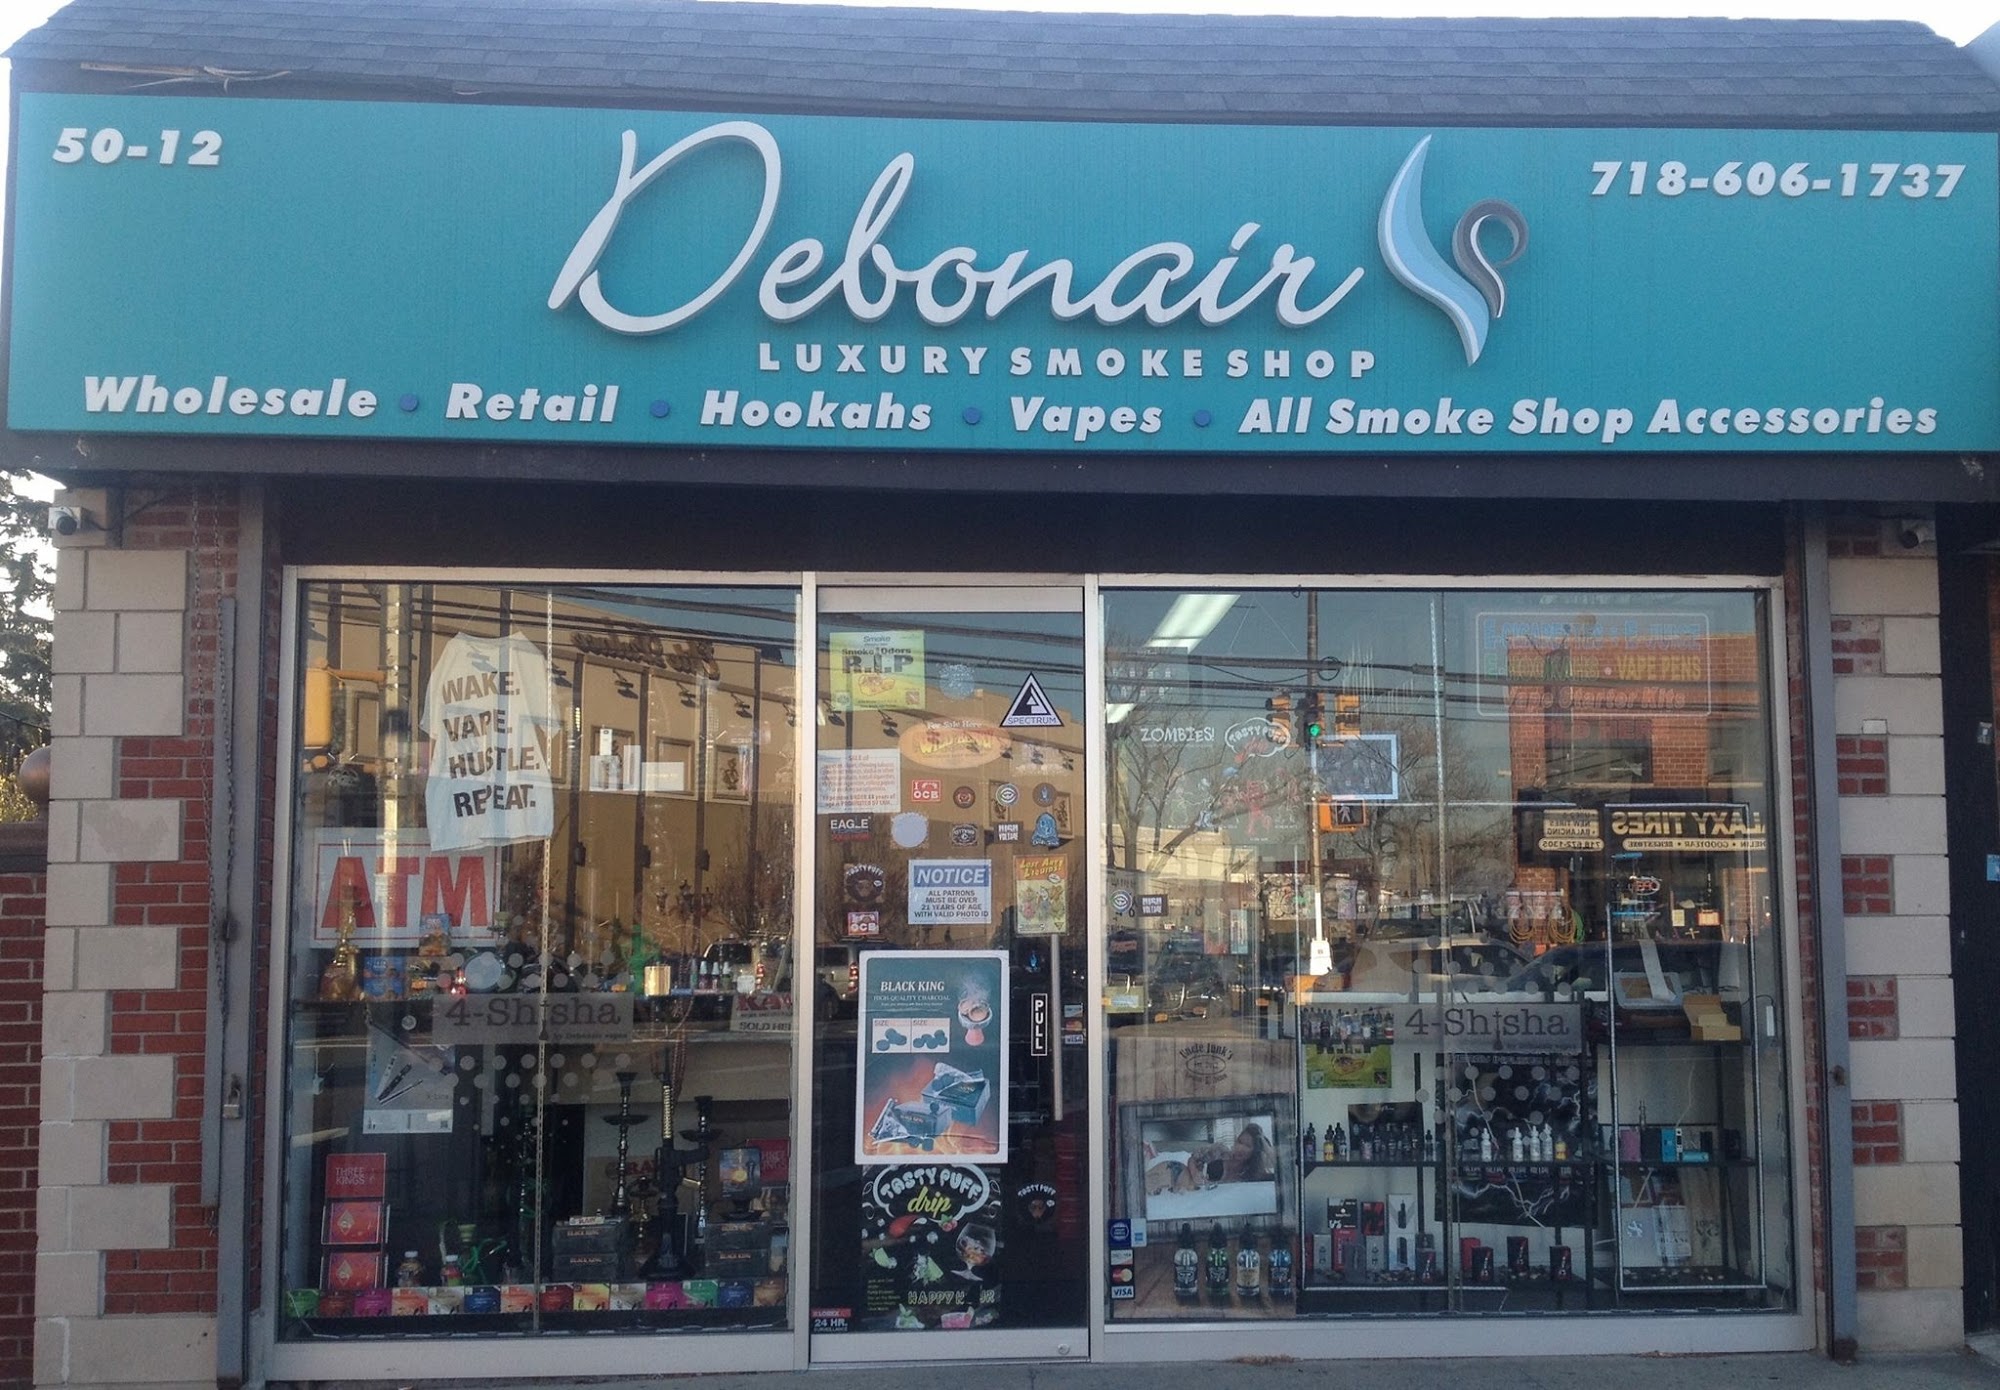 Debonair Luxury Smoke Shop